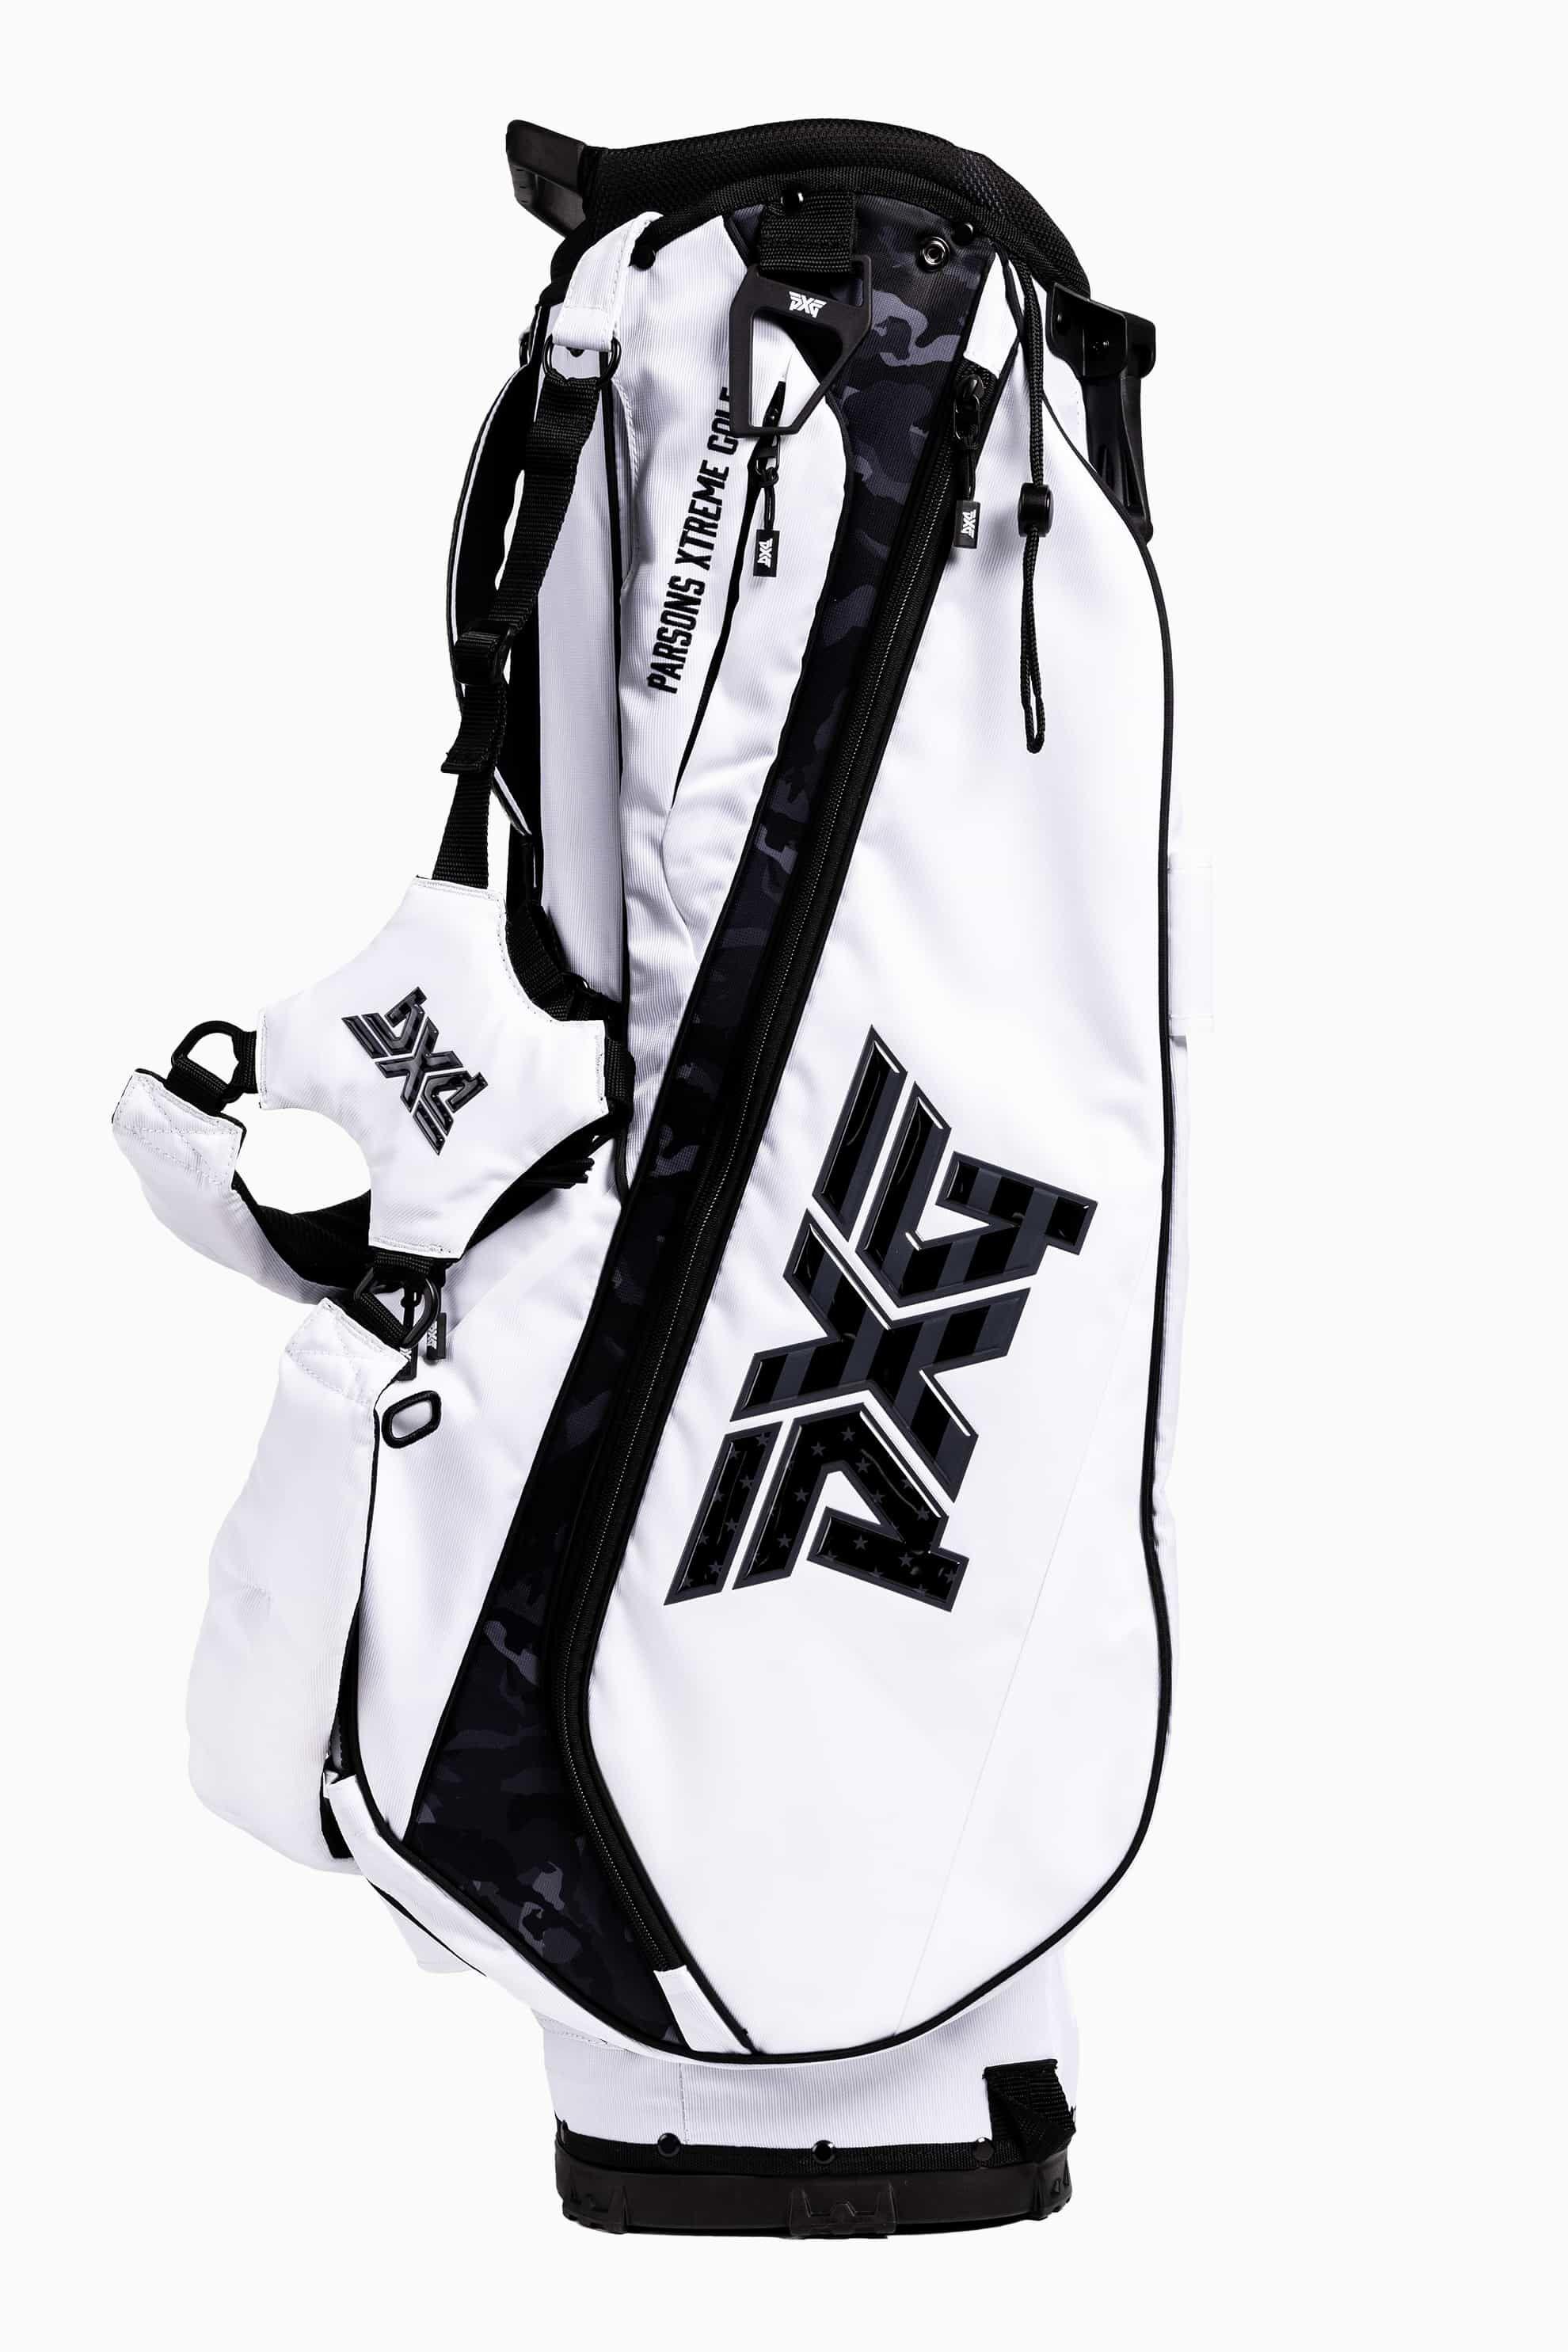 PXG Golf Stand Bags: Premium Design & Ultimate Convenience